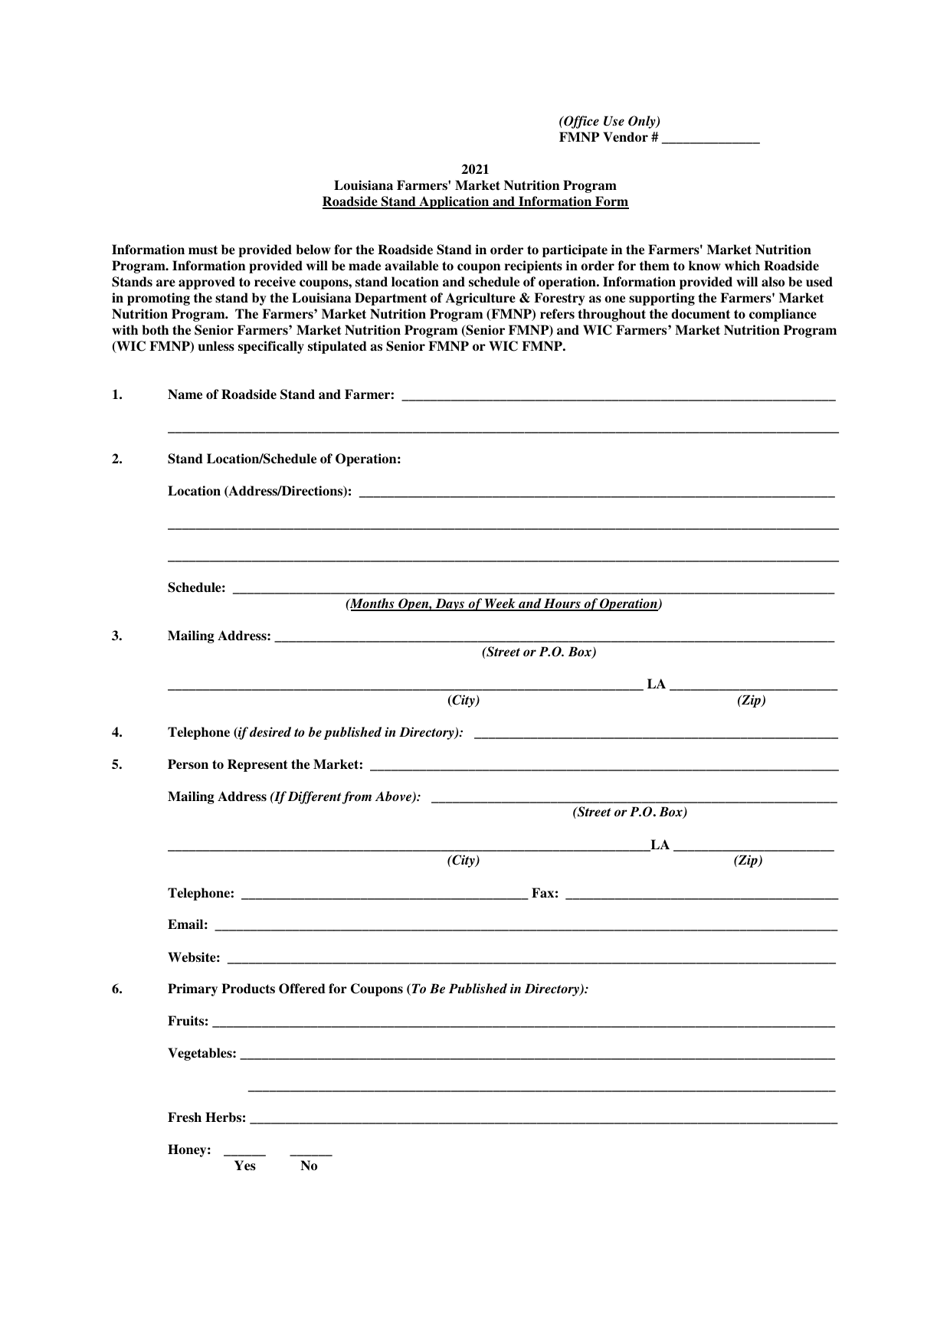 Roadside Stand Application and Information Form - Louisiana Farmers Market Nutrition Program - Louisiana, Page 1